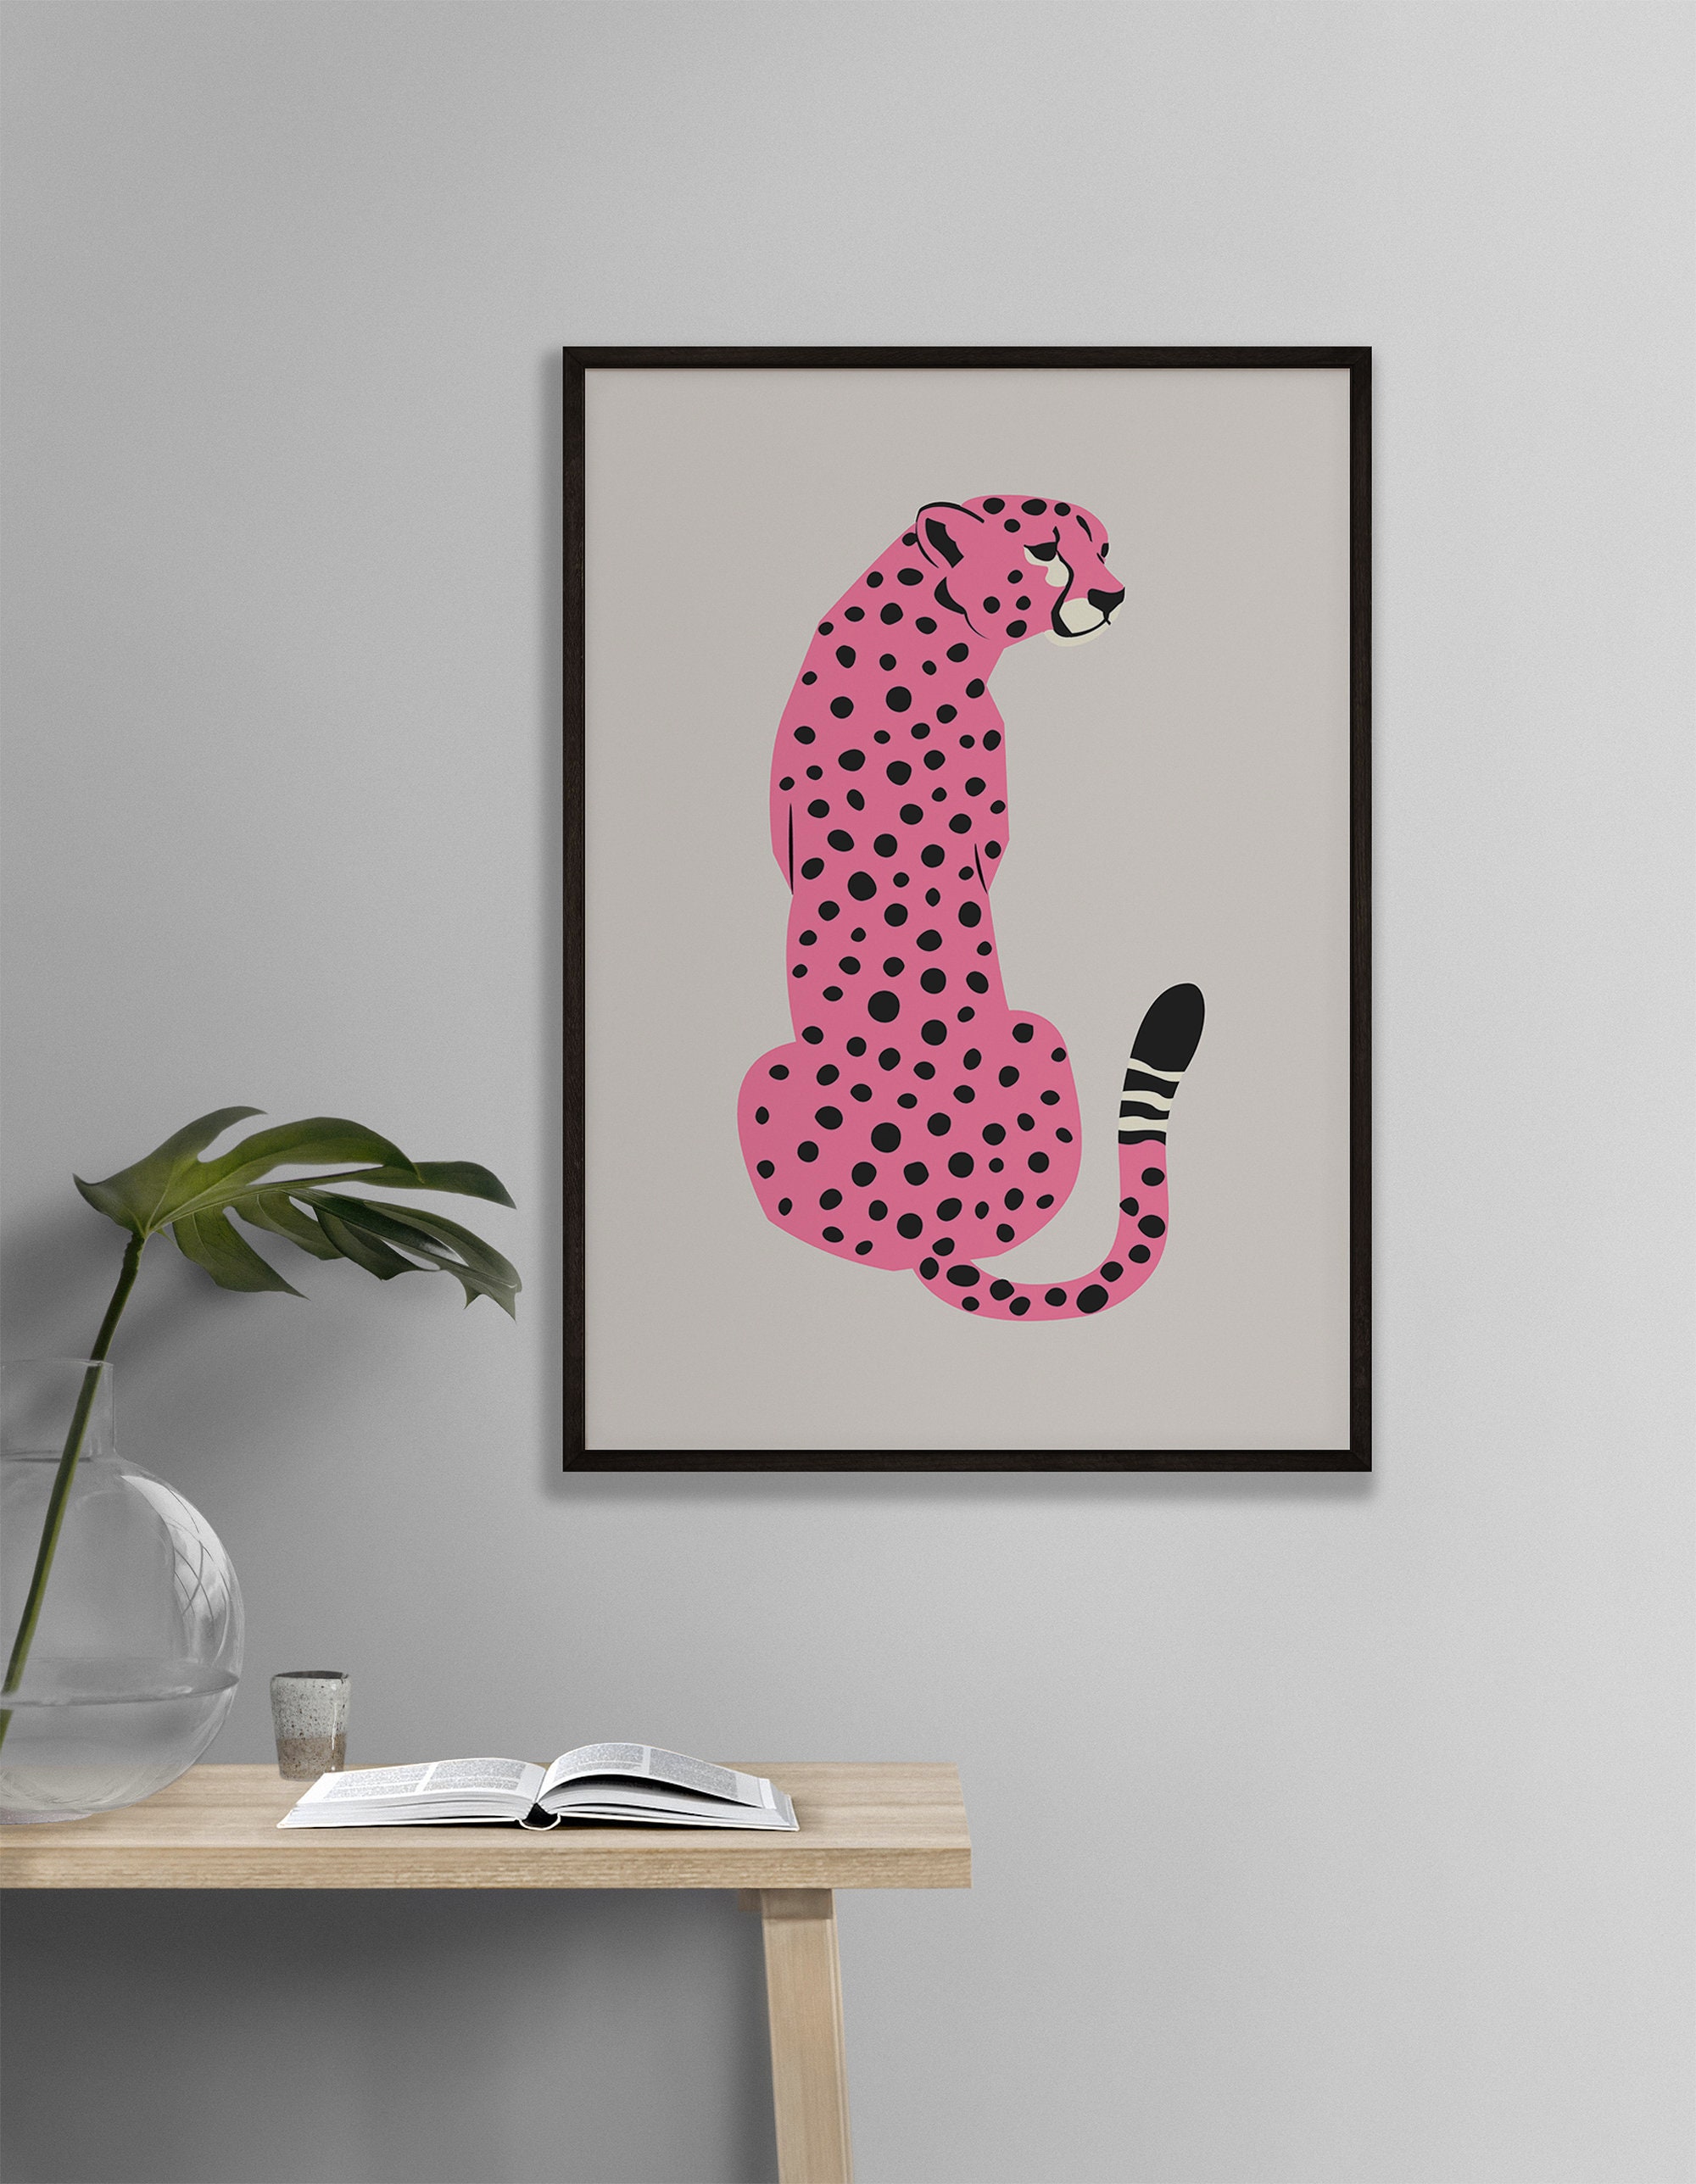 Pink Boho Cheetah Wallpaper – Koko Art Shop